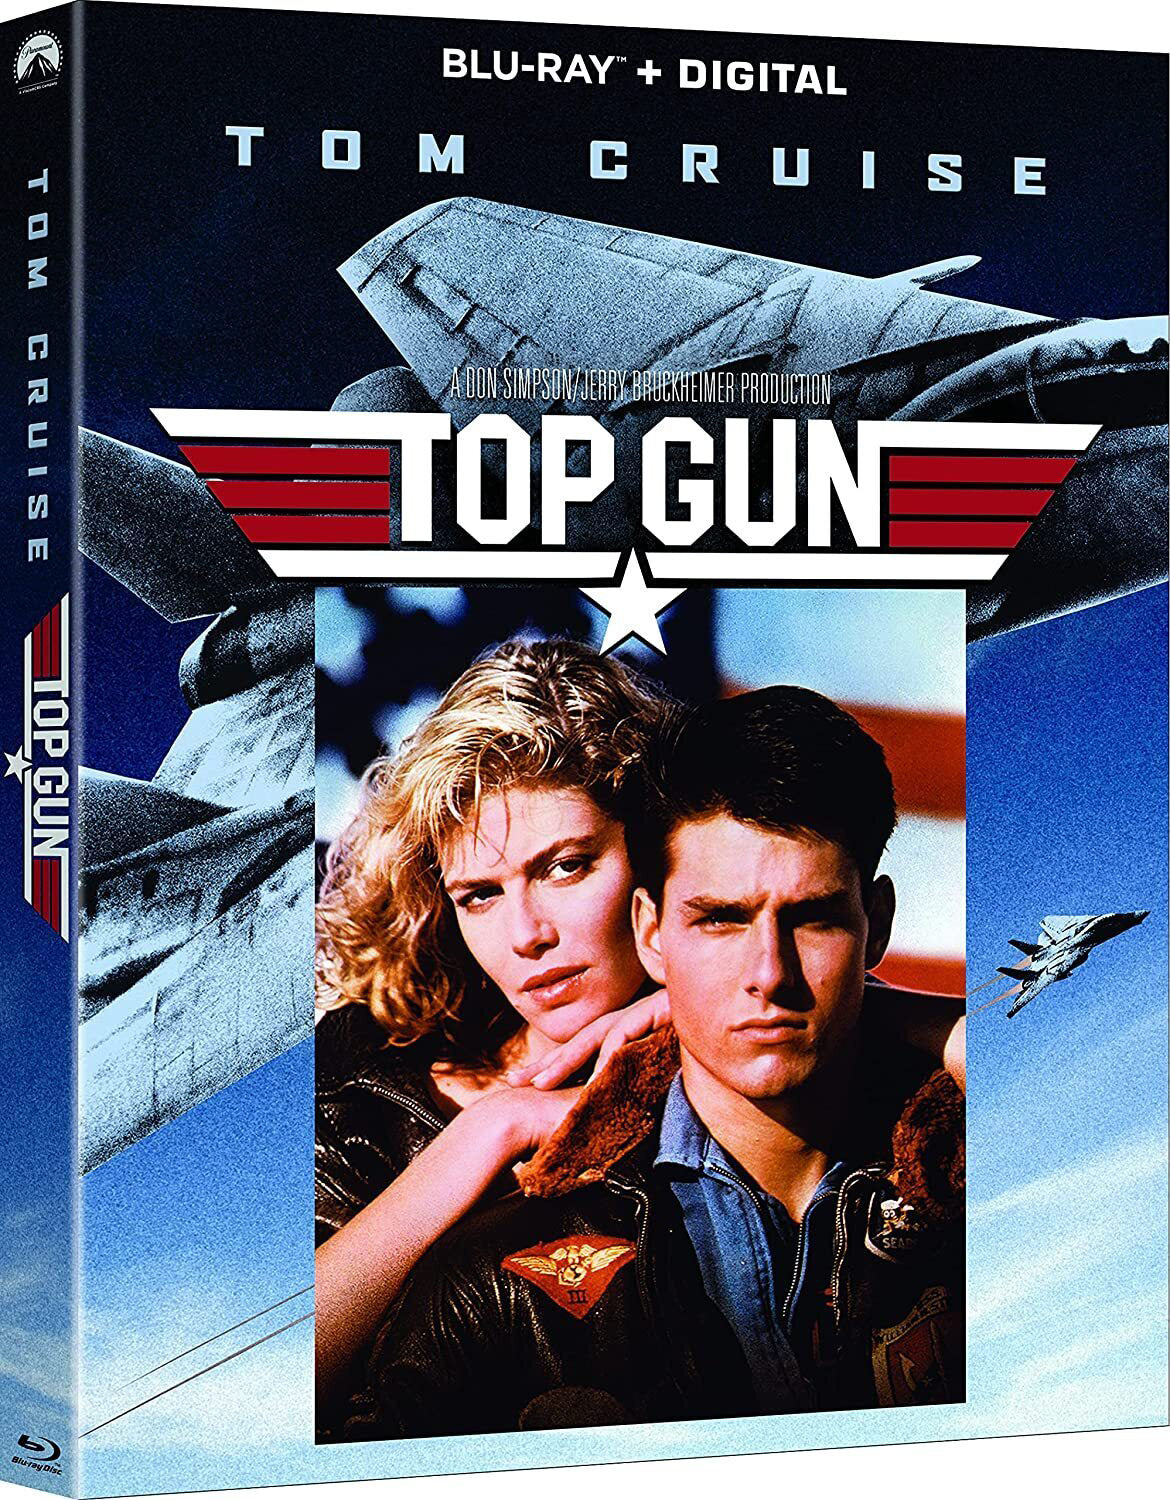 Top Gun [Includes Digital Copy] [Blu-ray] cover art